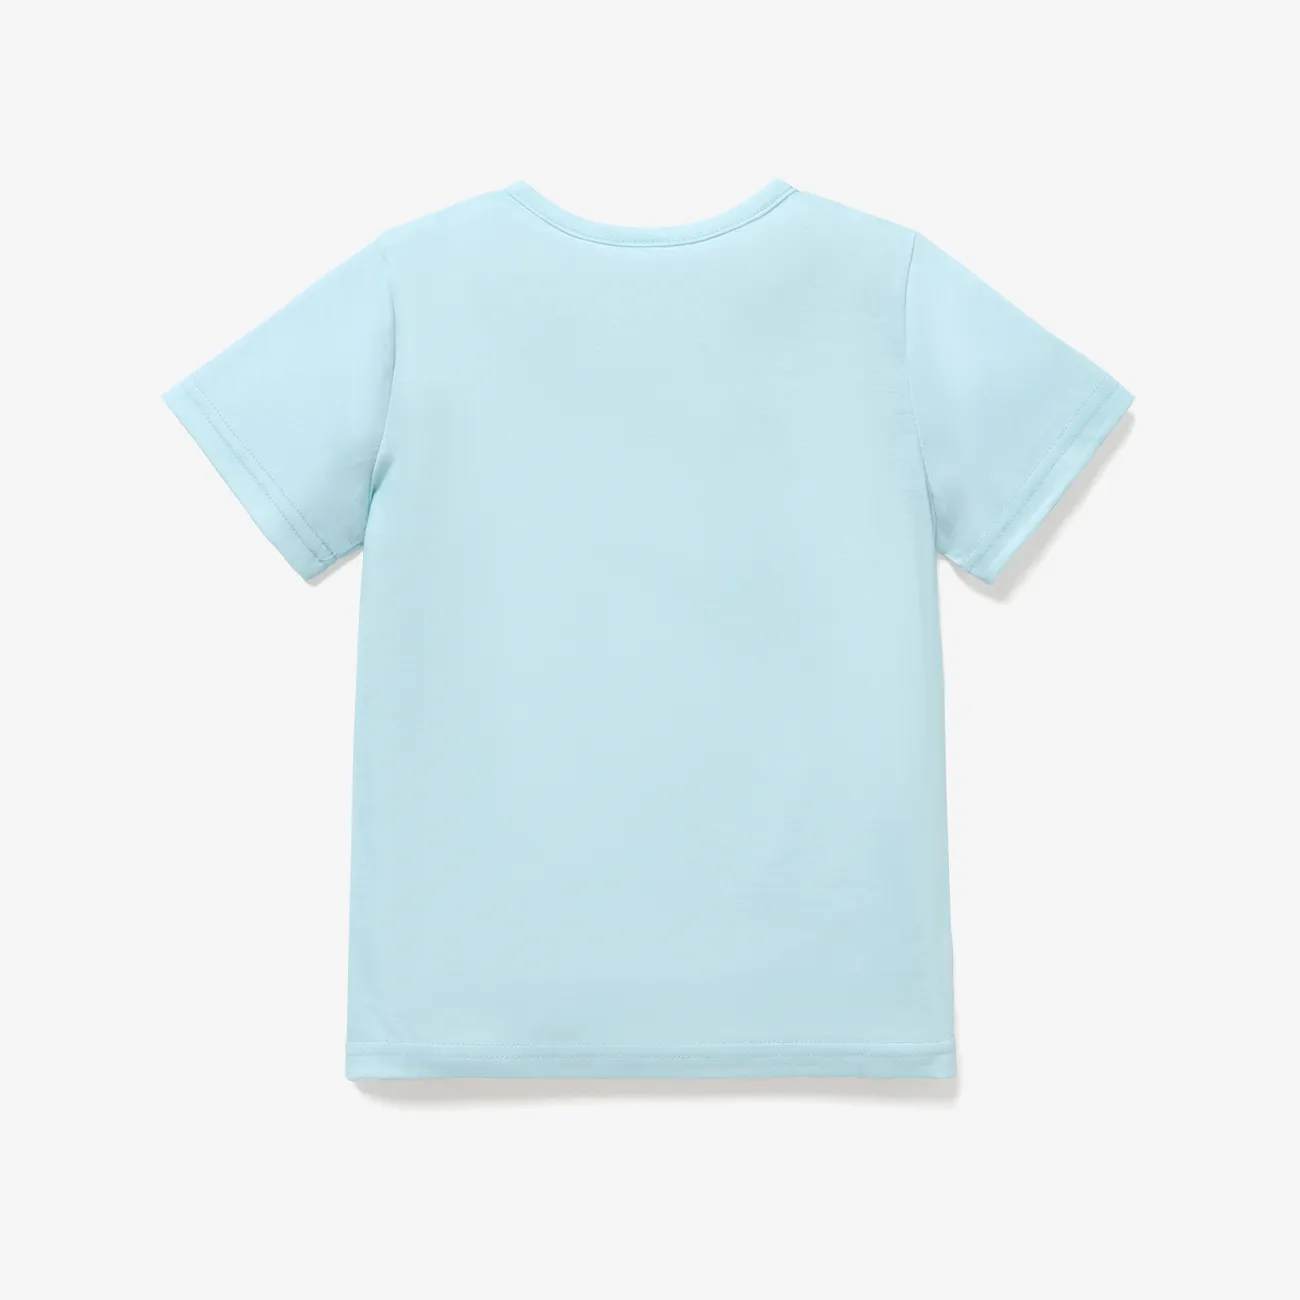 Ostern Kinder Mädchen Tierbild Kurzärmelig T-Shirts hellblau big image 1